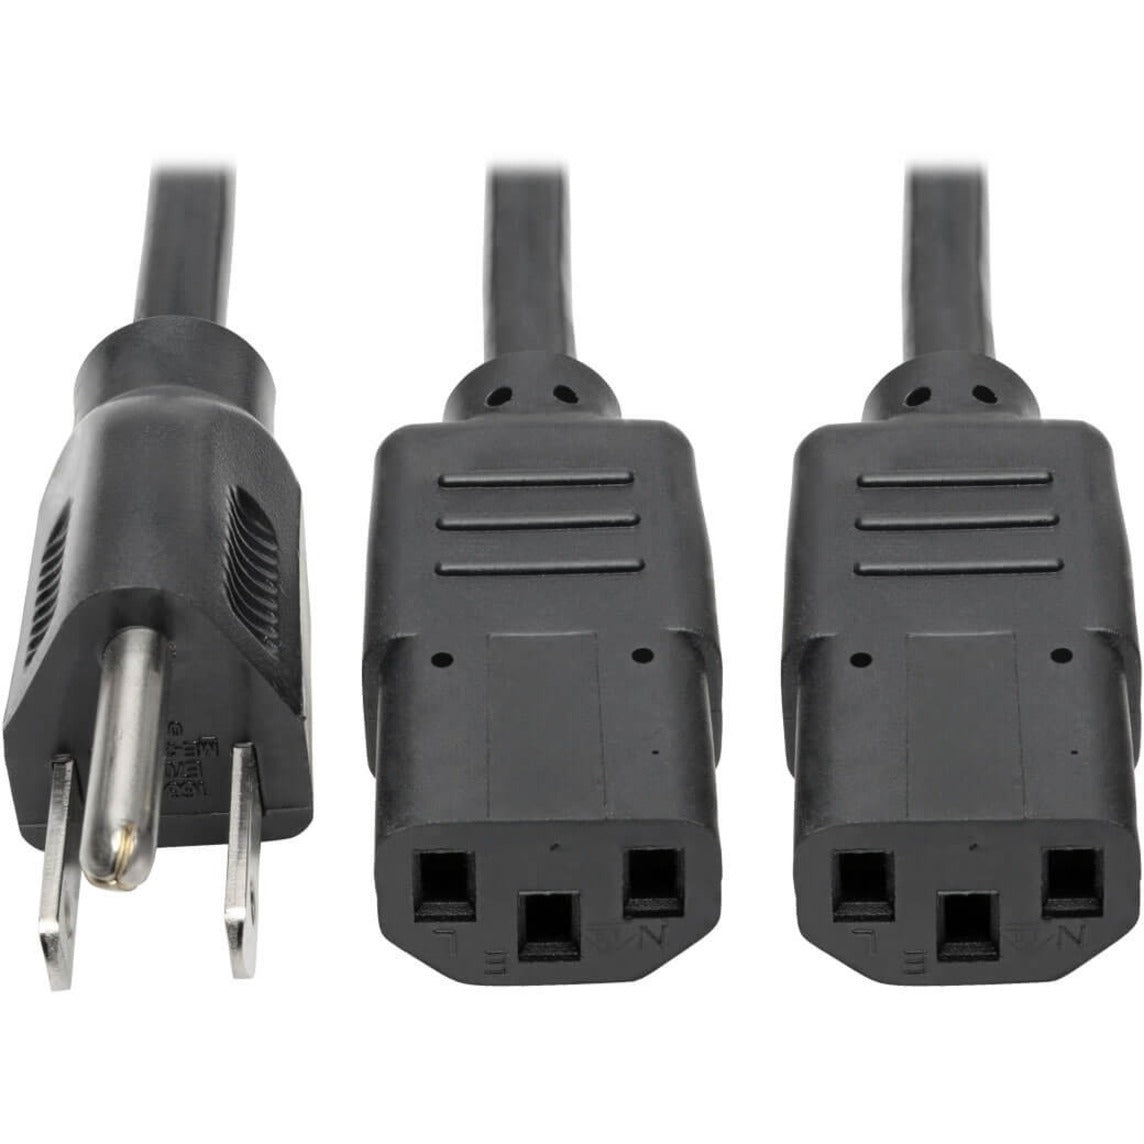 Marca: Tripp Lite Cable divisor de 6 pies cable de alimentación P006-006-2 NEMA 5-15P a 2 x Cable divisor de C13